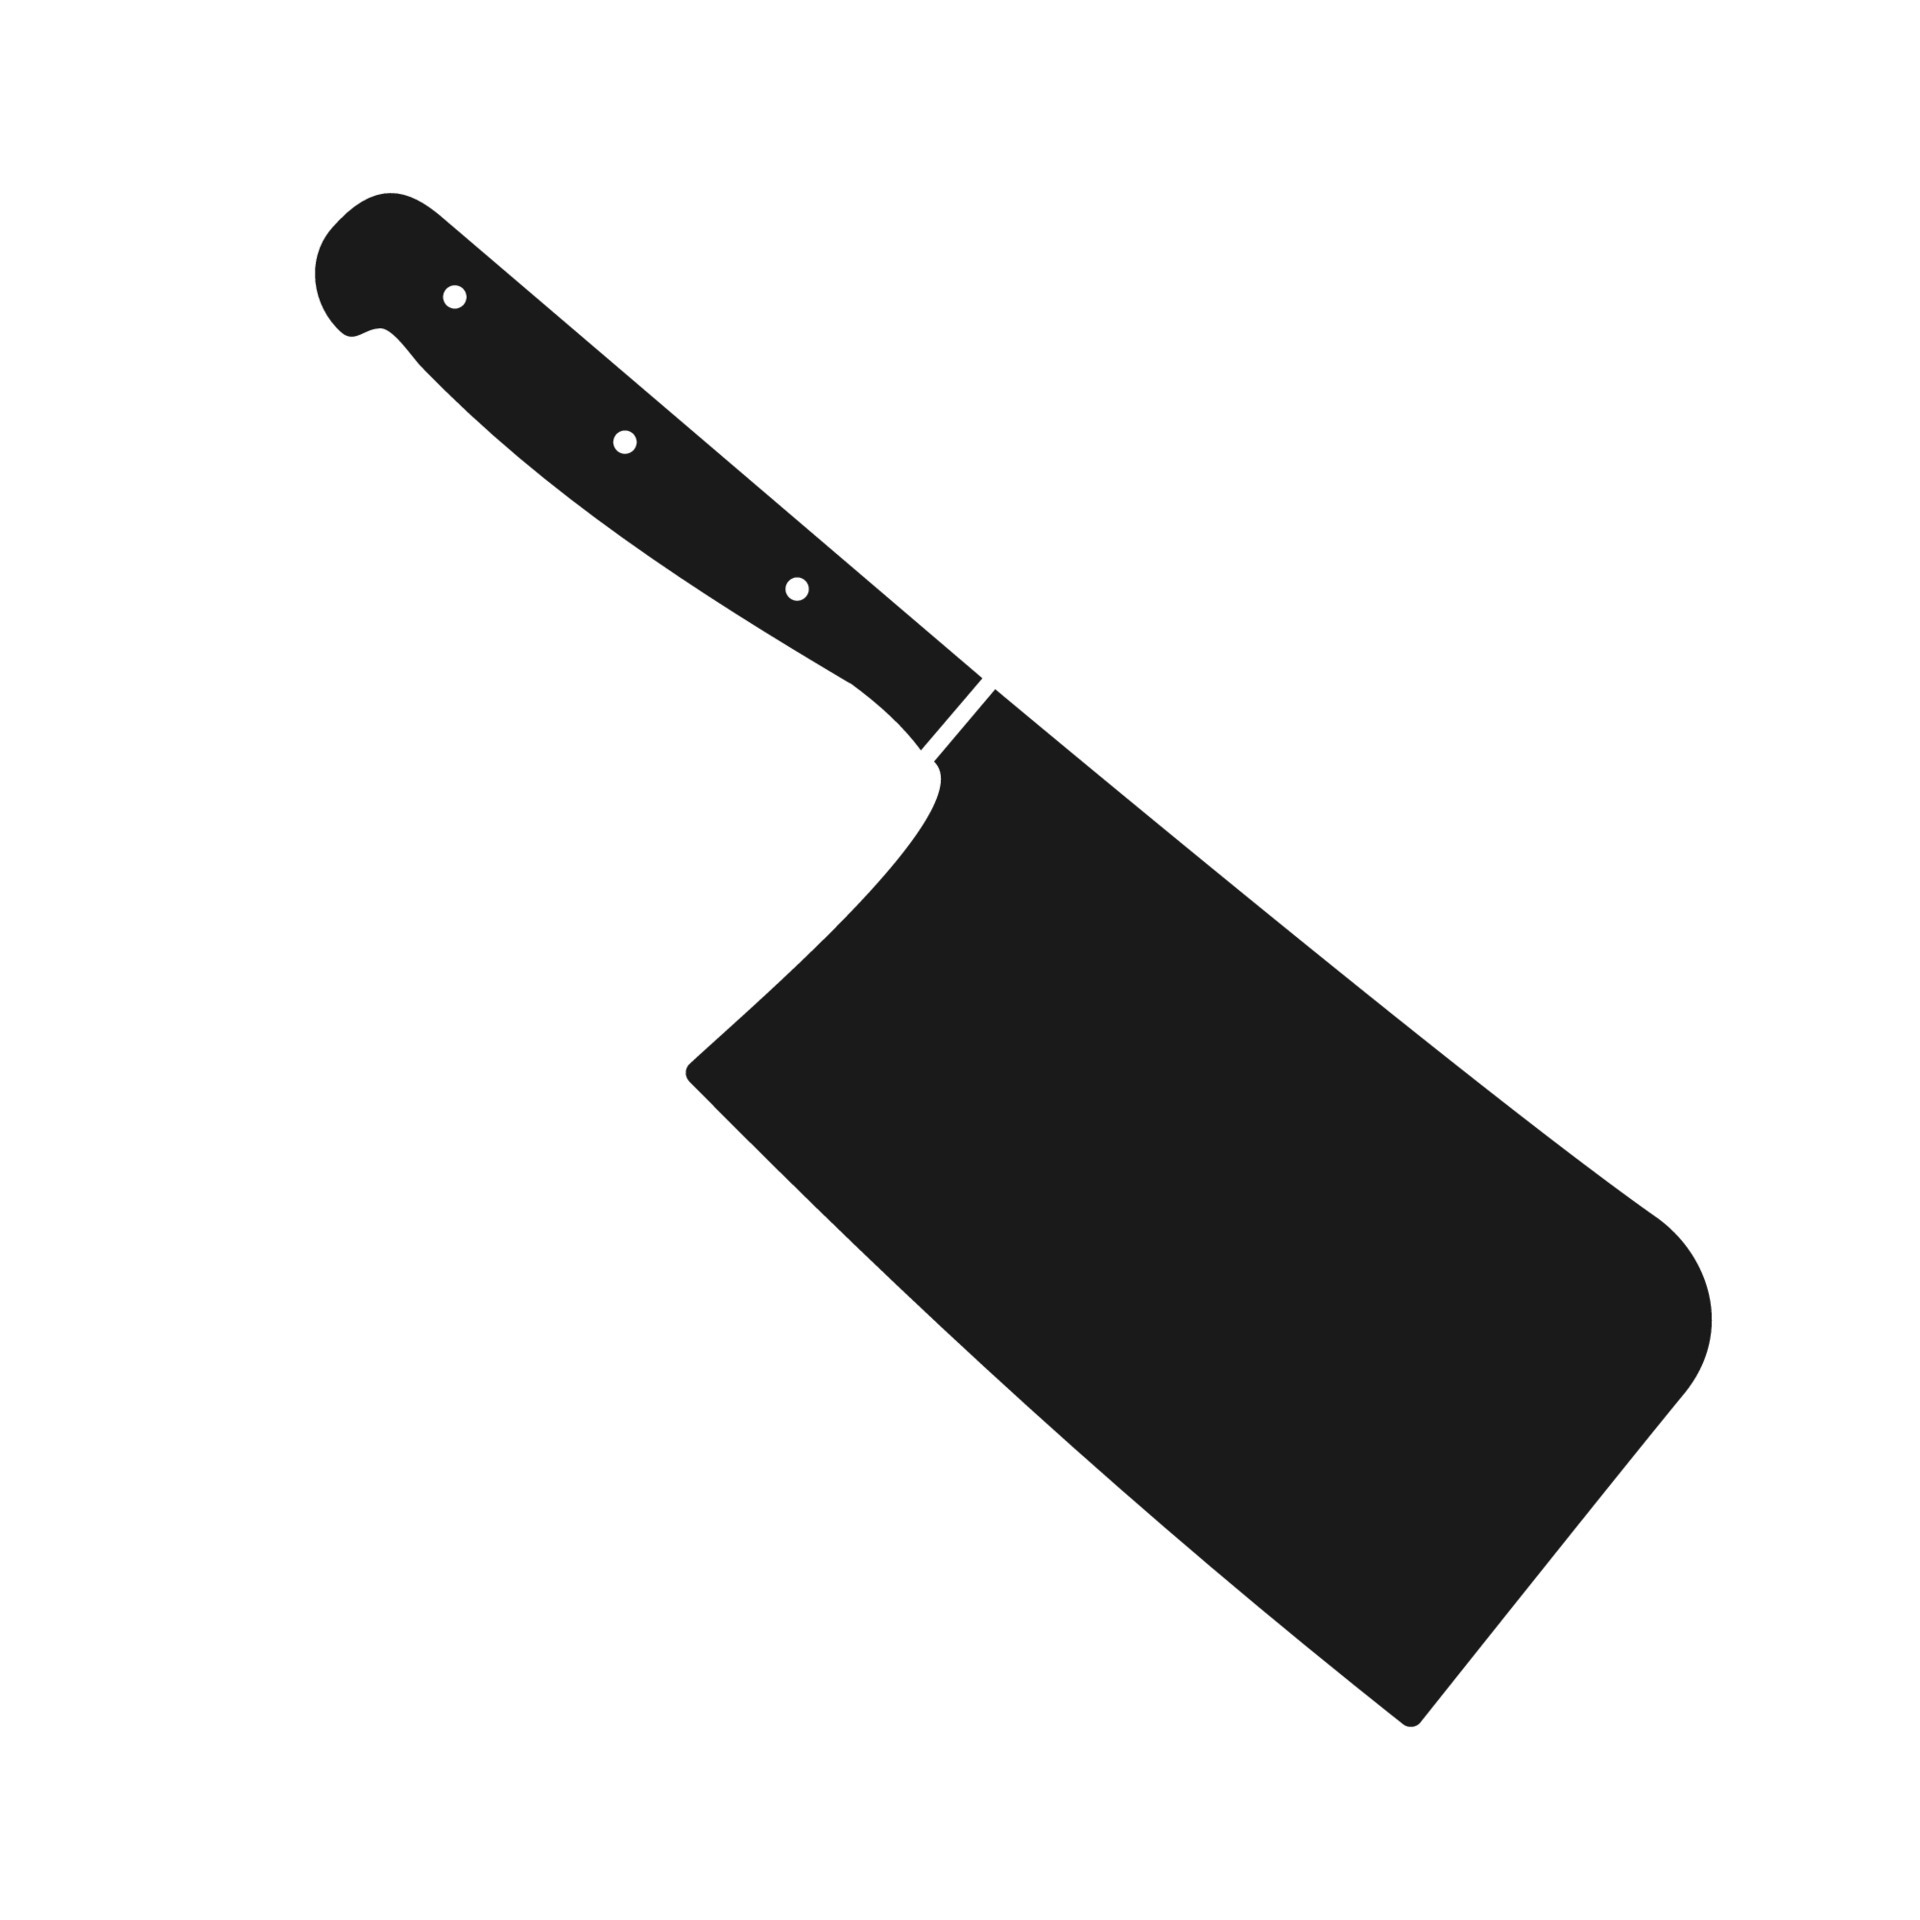 https://static.vecteezy.com/system/resources/previews/005/440/407/original/black-butcher-knife-kitchen-cleaver-knife-for-meat-icon-design-vector.jpg